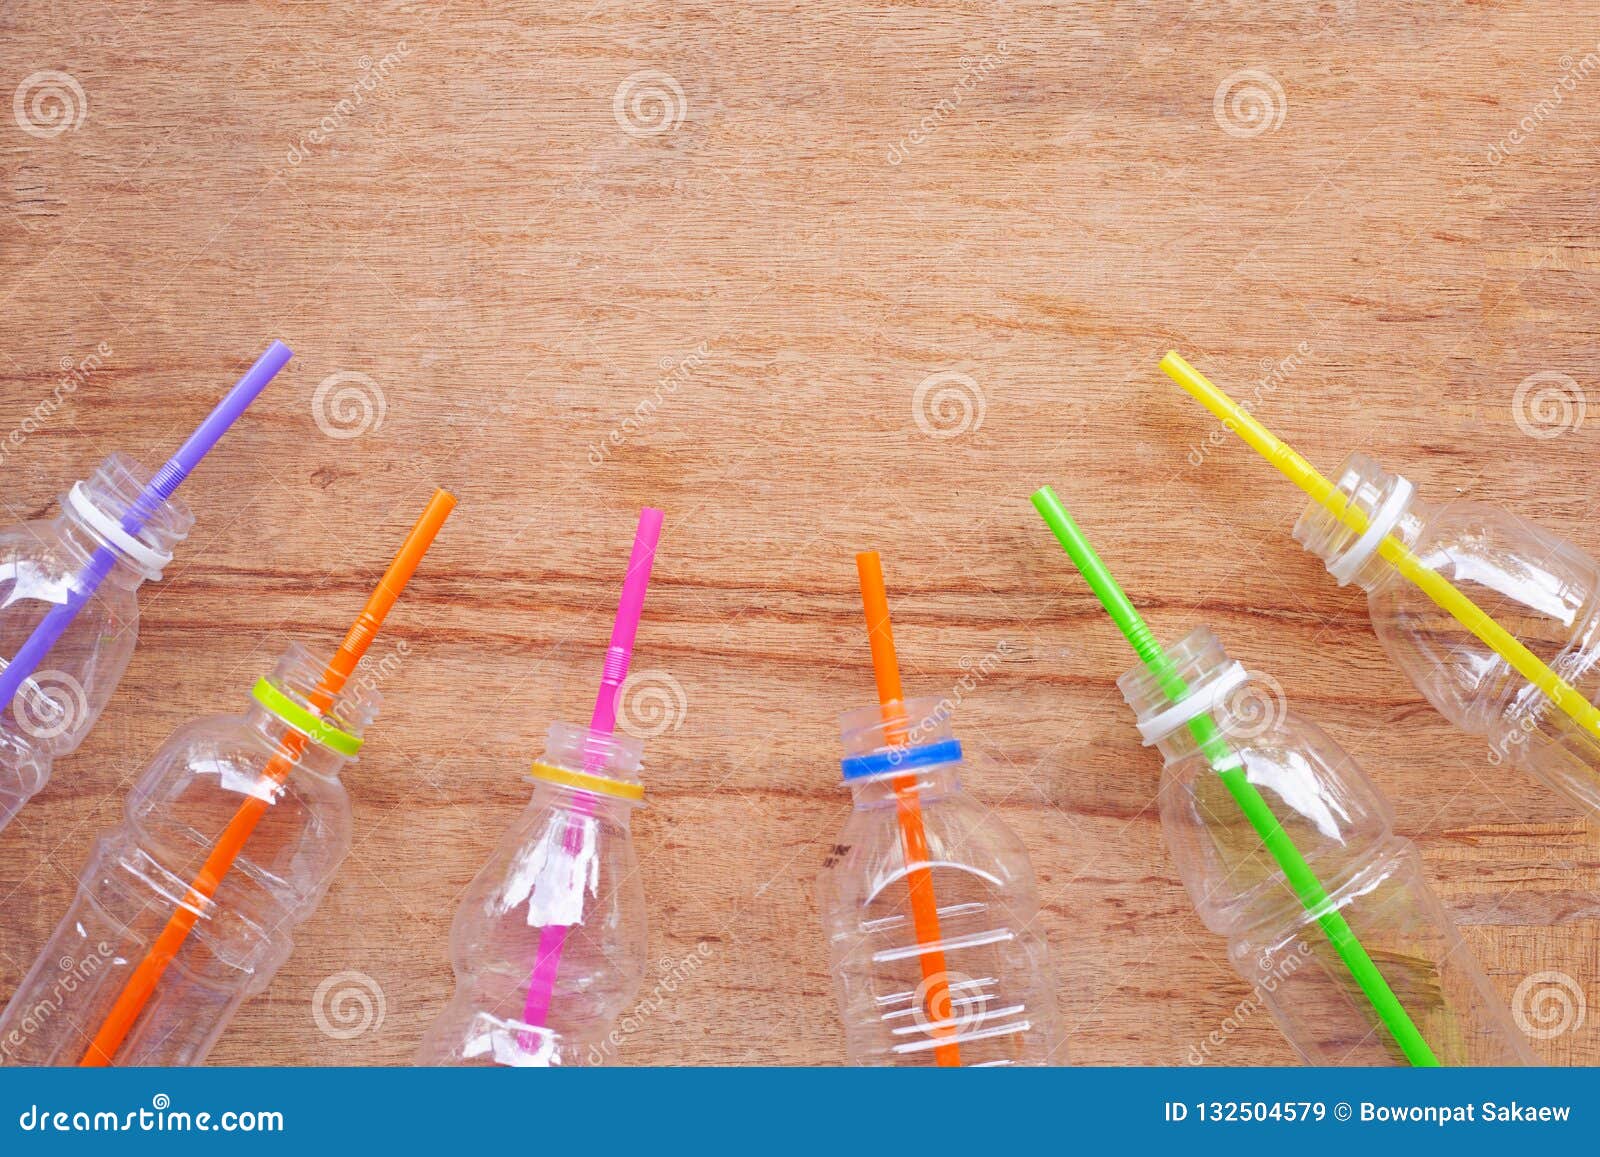 plastic waste, plastic bottles with straws